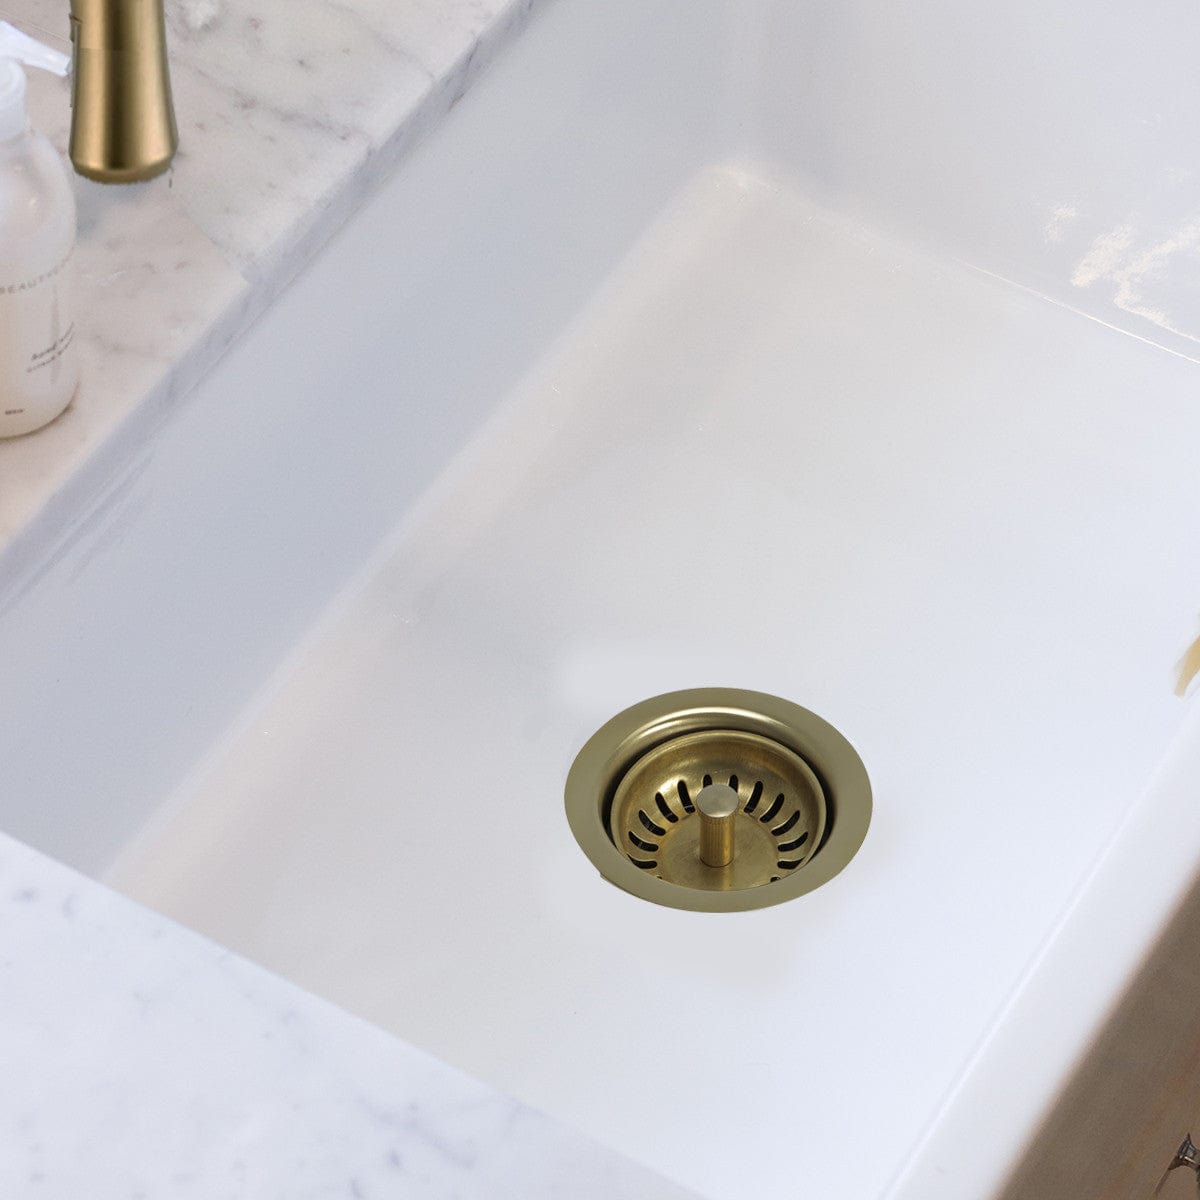 Nantucket Sink 3.5 Inch Extended Flange Disposal Kitchen Drain Brass